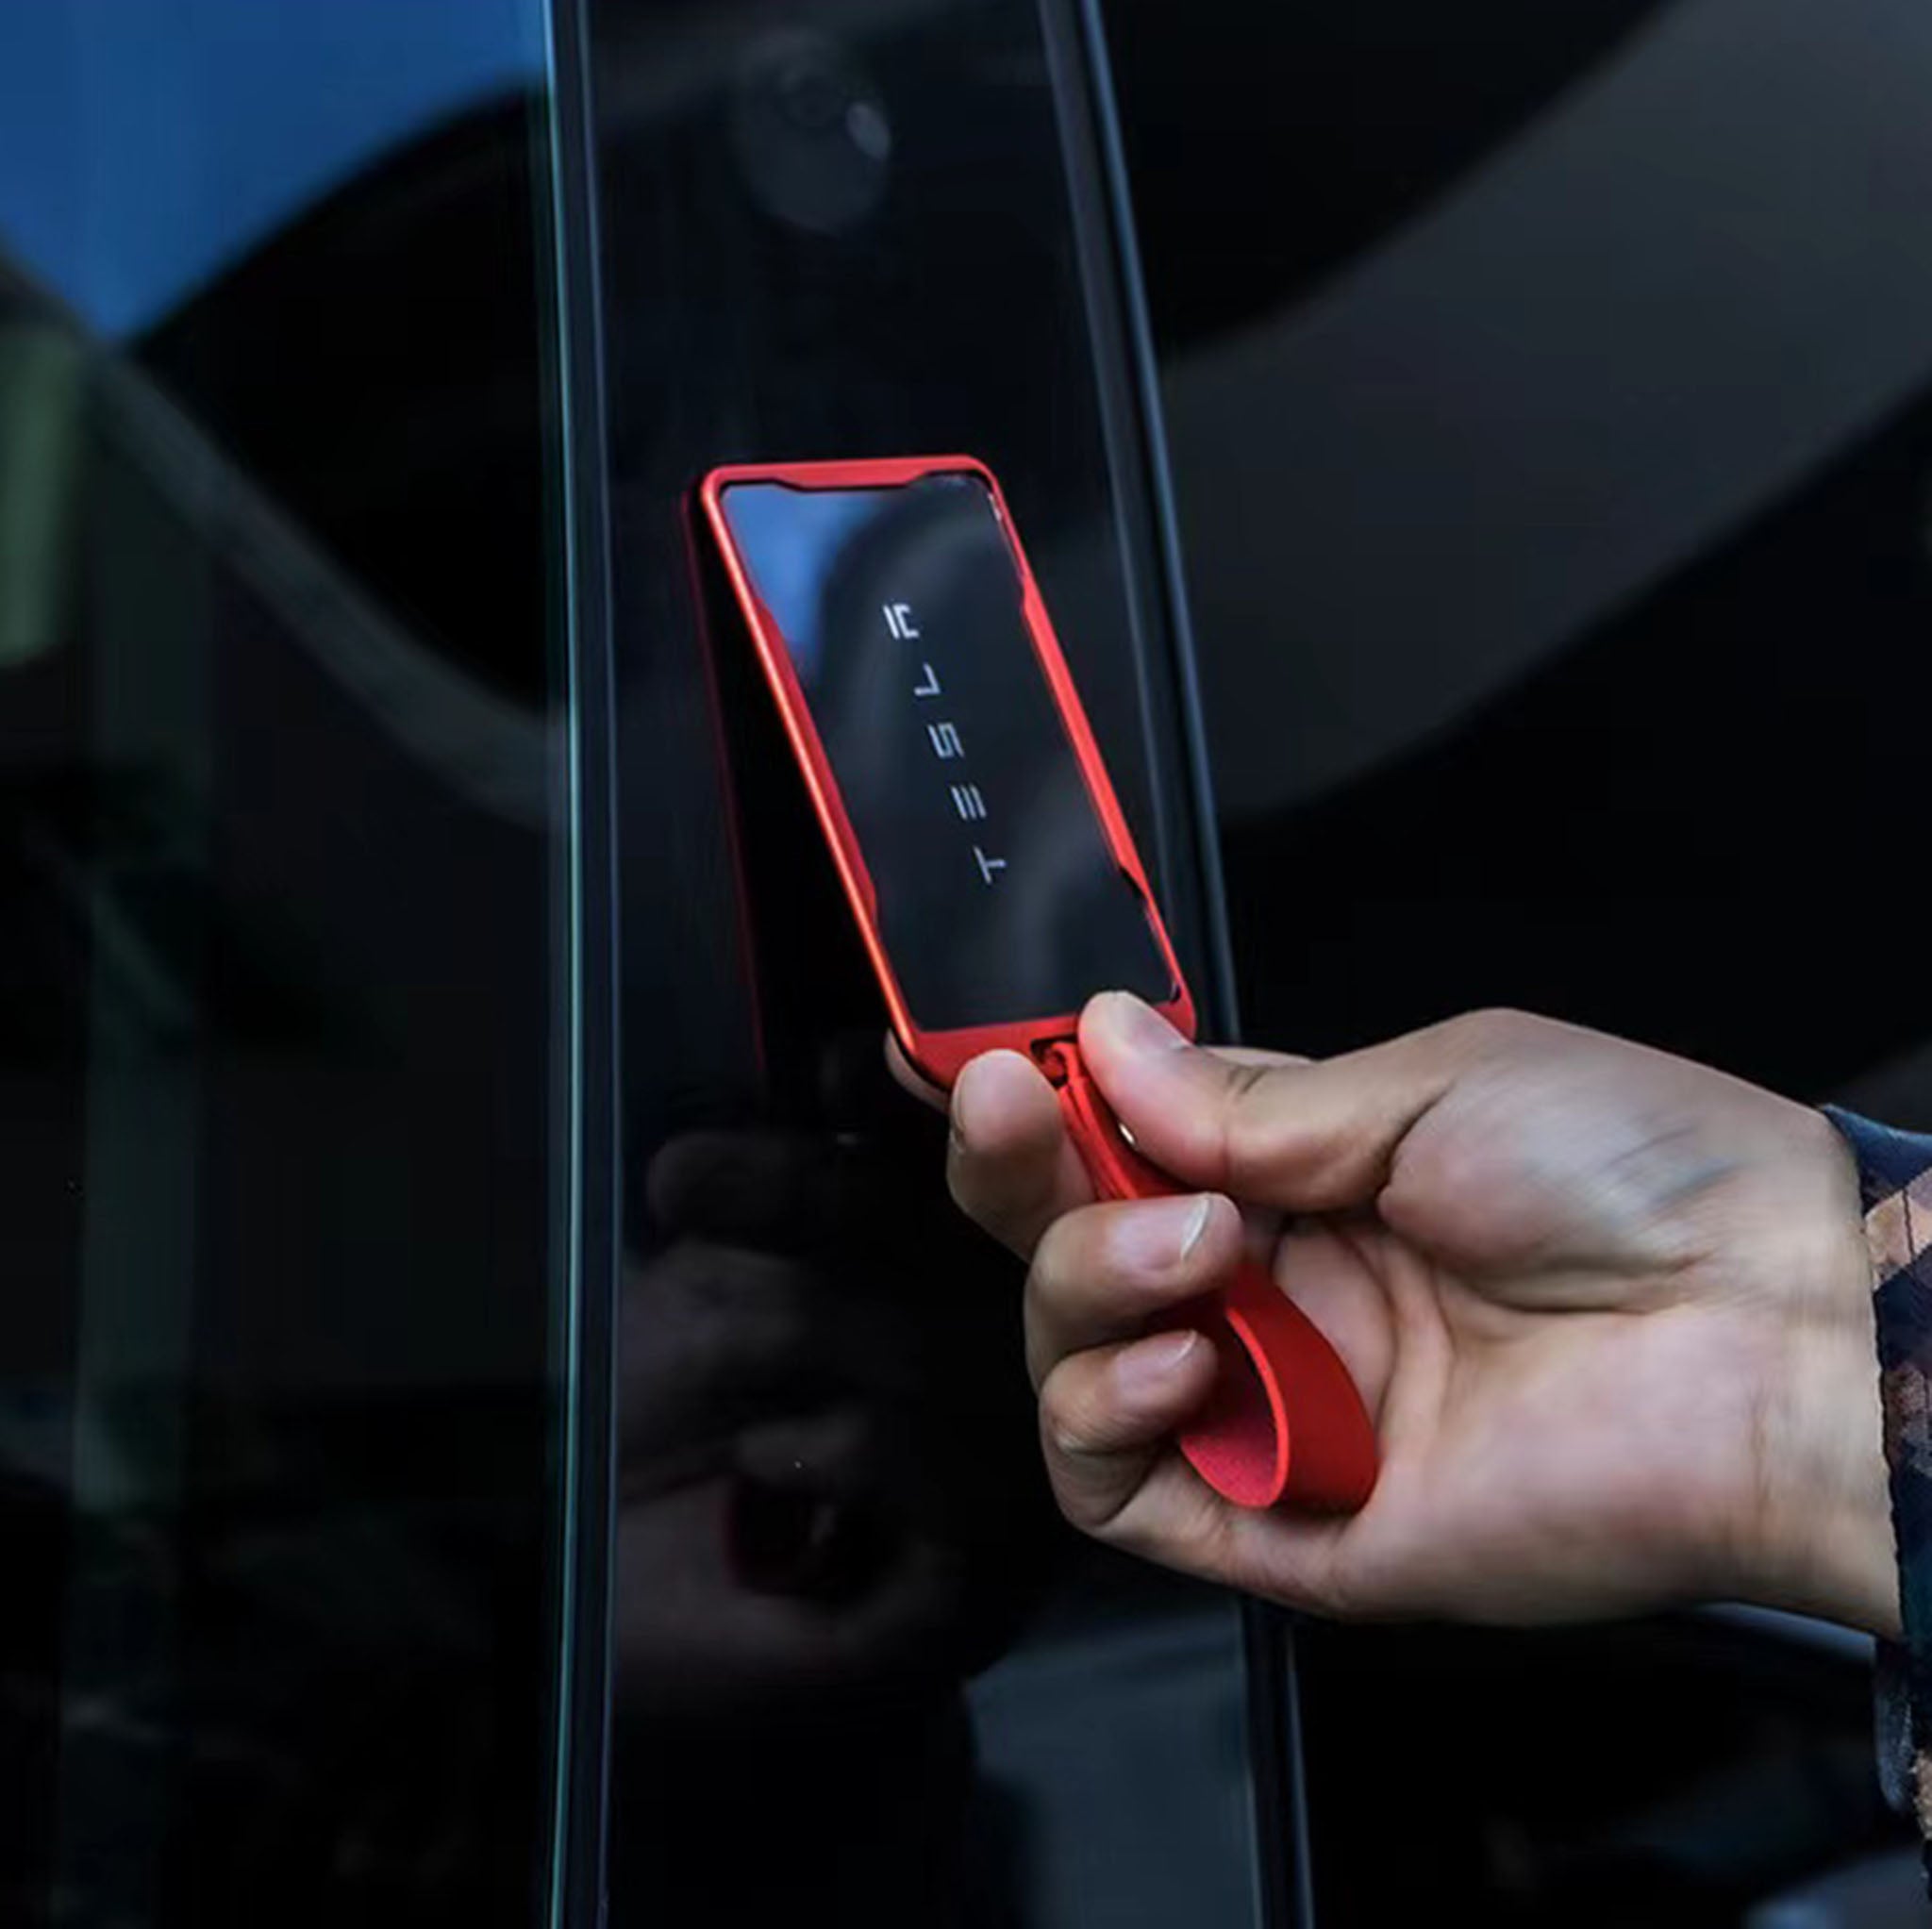 Auto Key Card Holder Fit Kompatibel mit Tesla Model 3 Silikon